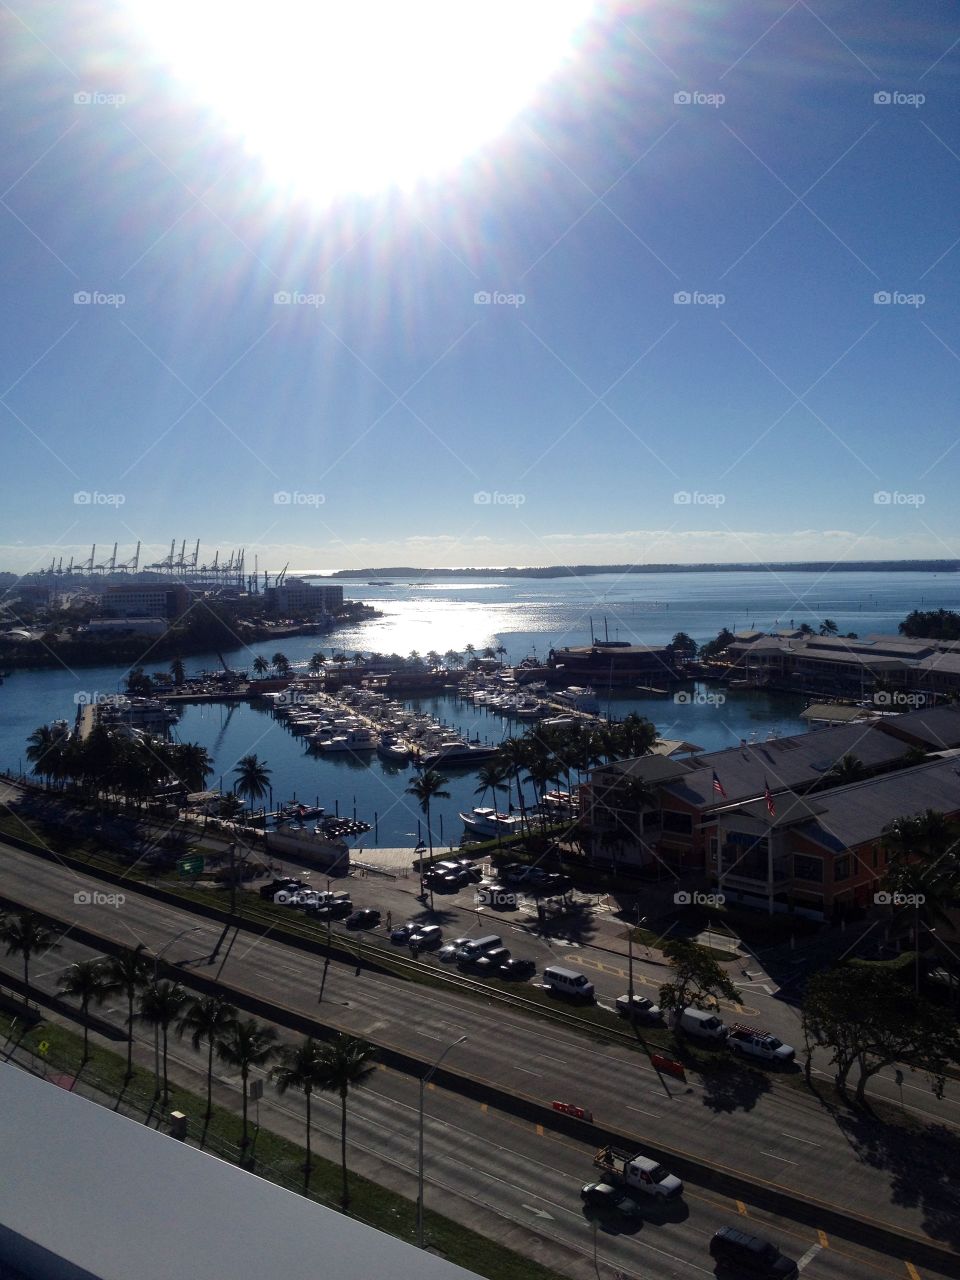 Biscayne bay. View of Biscayne Bay, Miami, FL